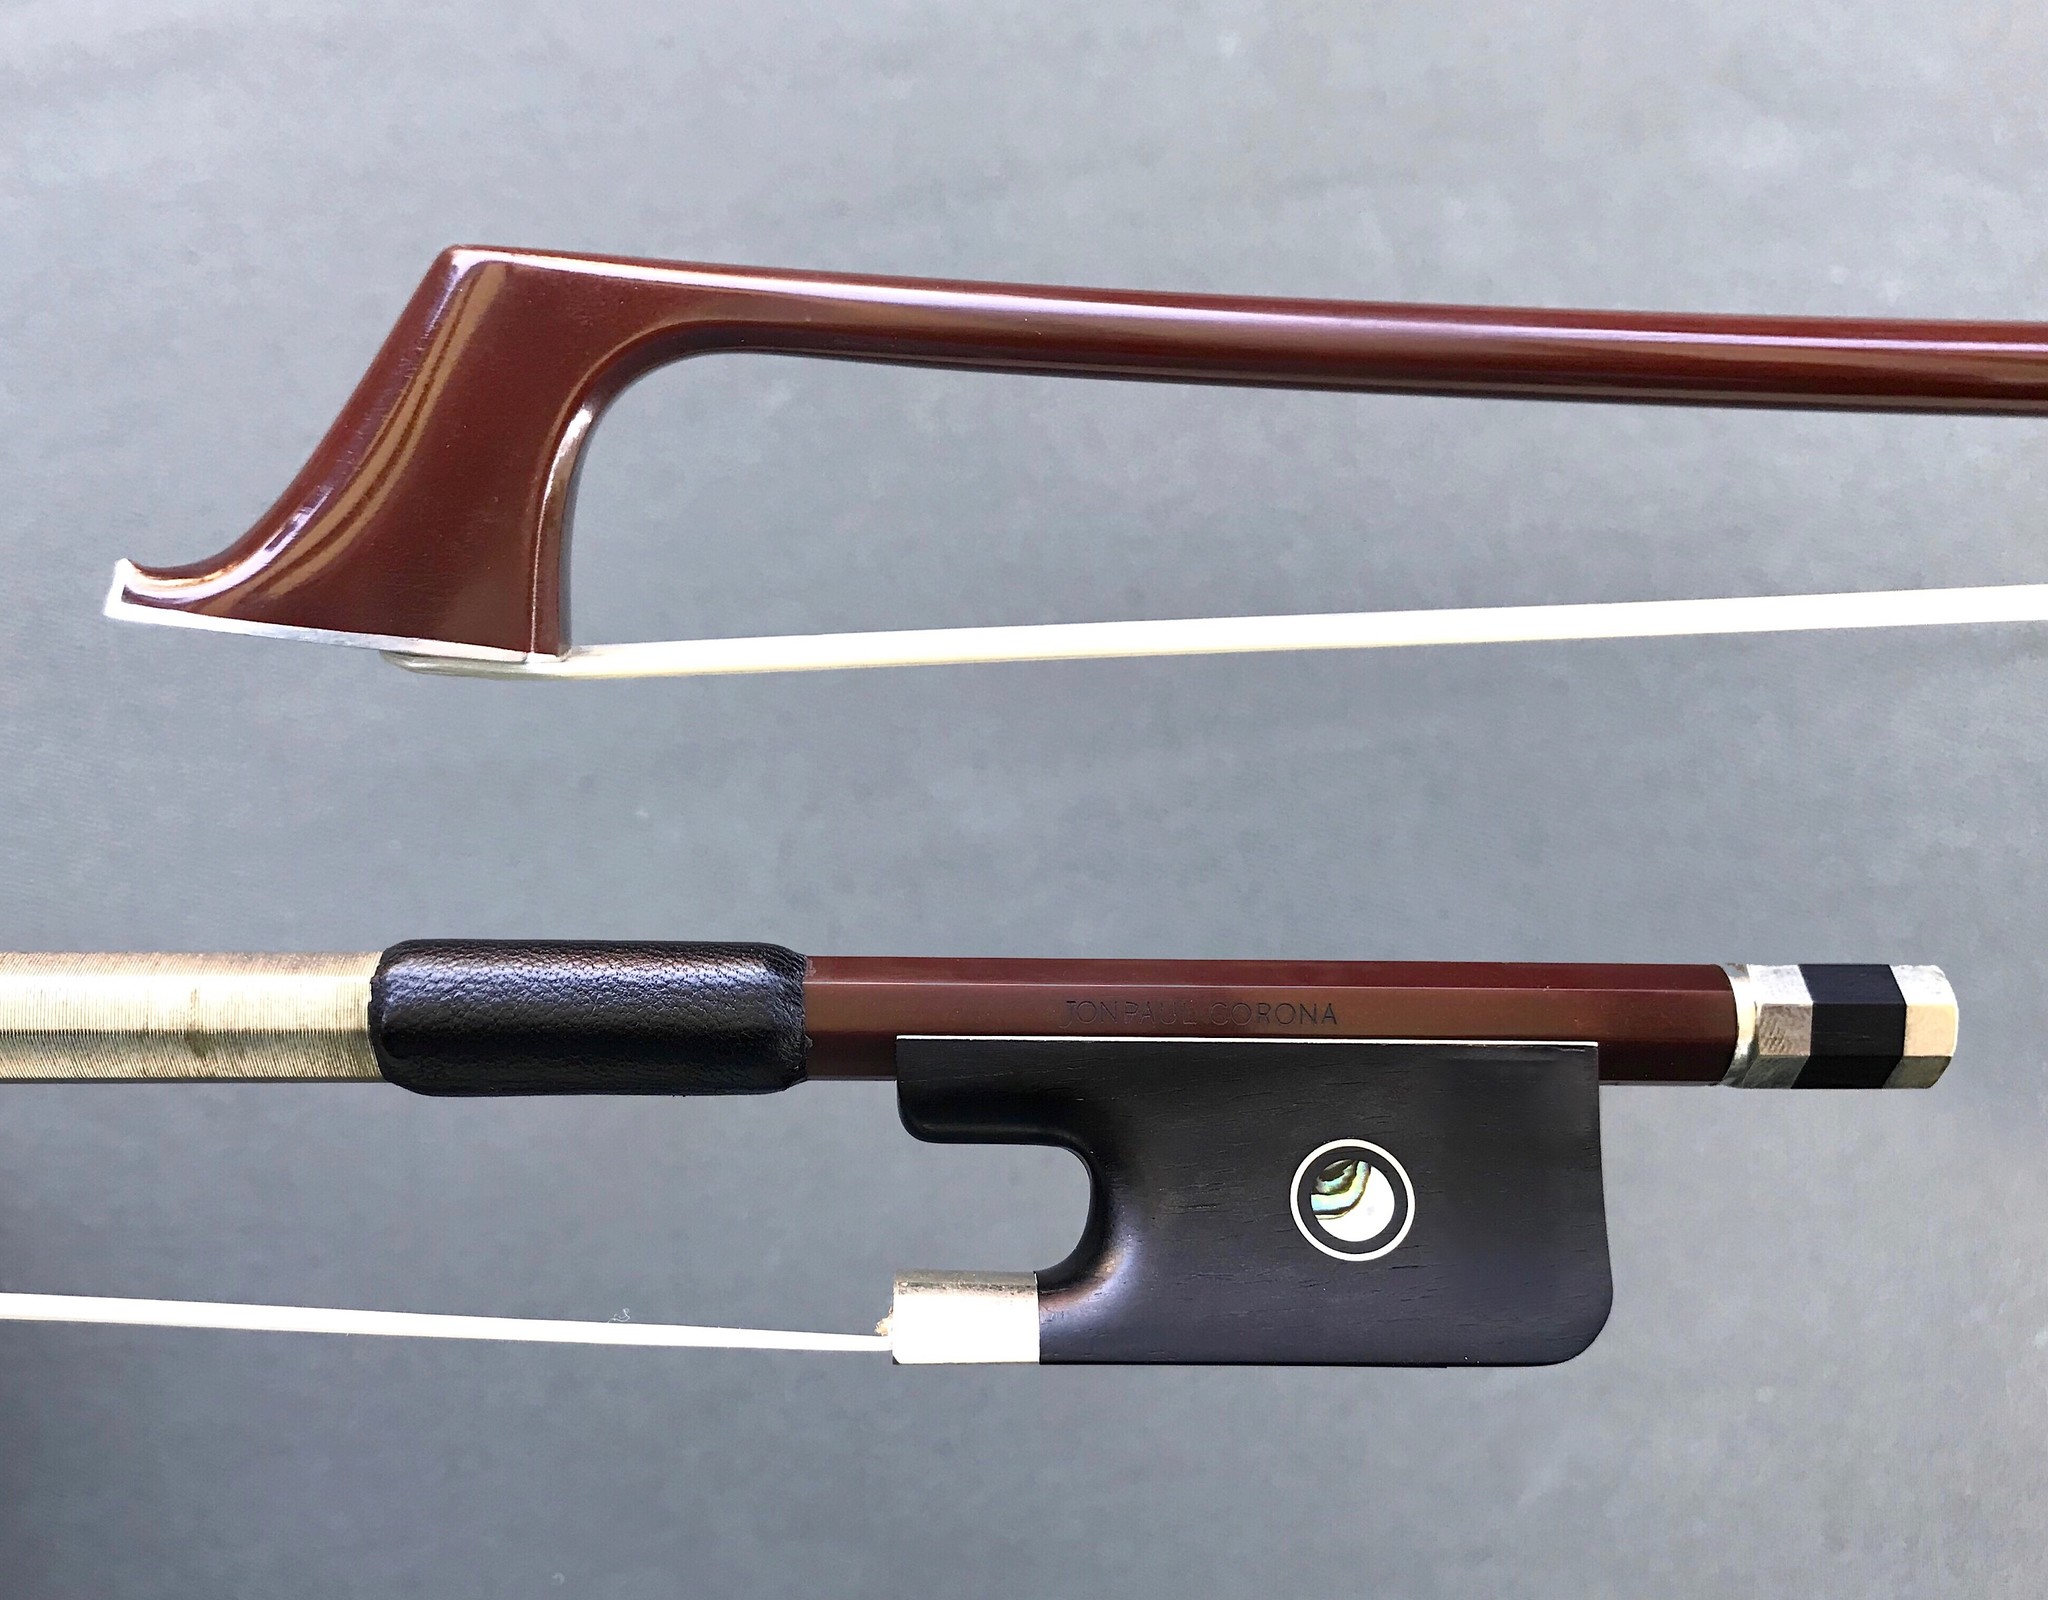 JonPaul JonPaul CORONA carbon fiber nickel cello bow with brown finish, USA